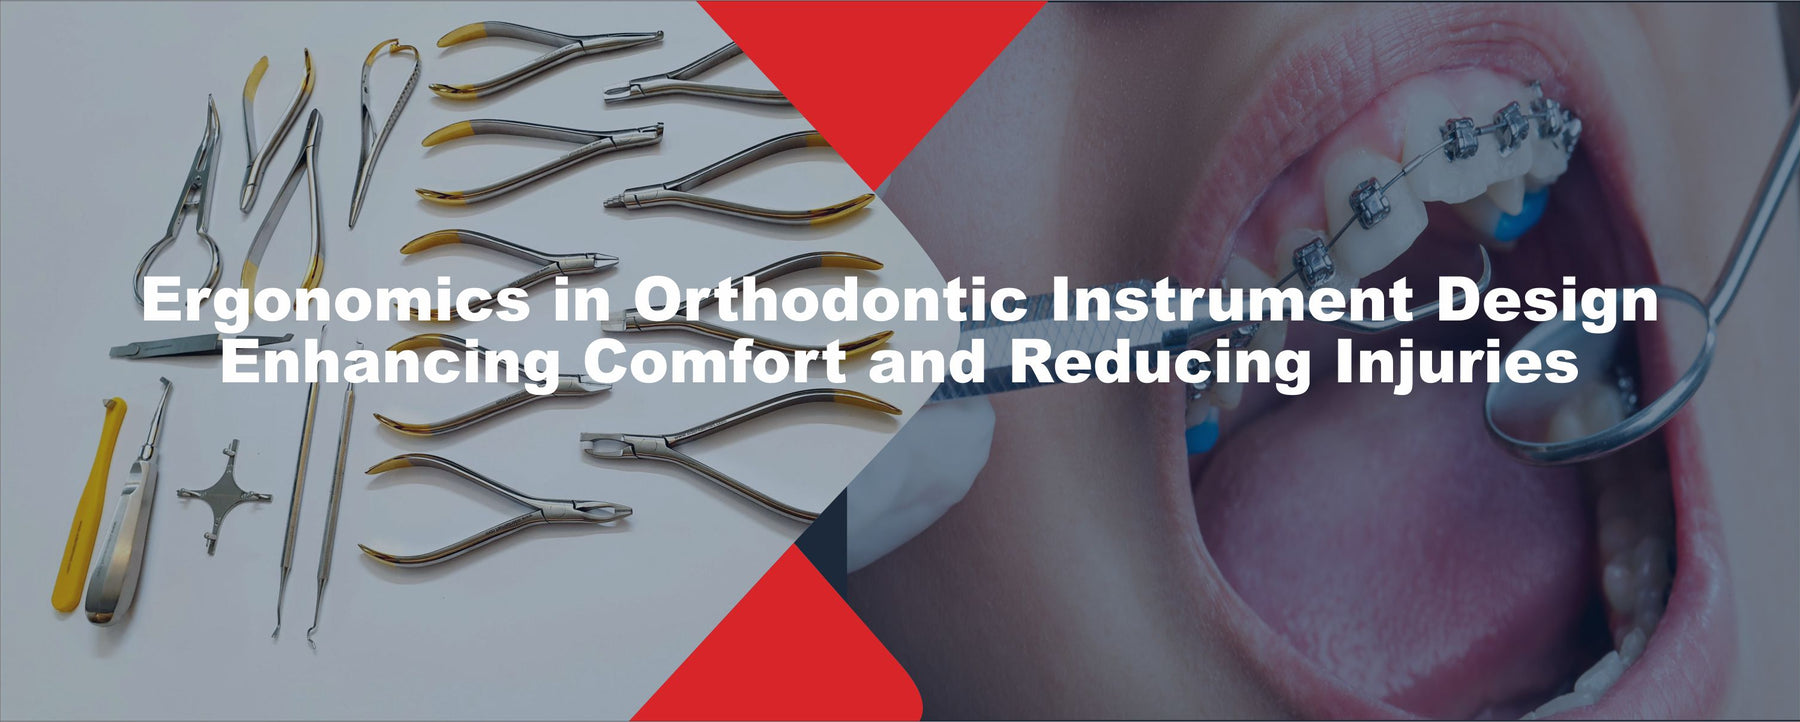 Ergonomics in Orthodontic Instrument Design: Enhancing Comfort and Reducing Injuries